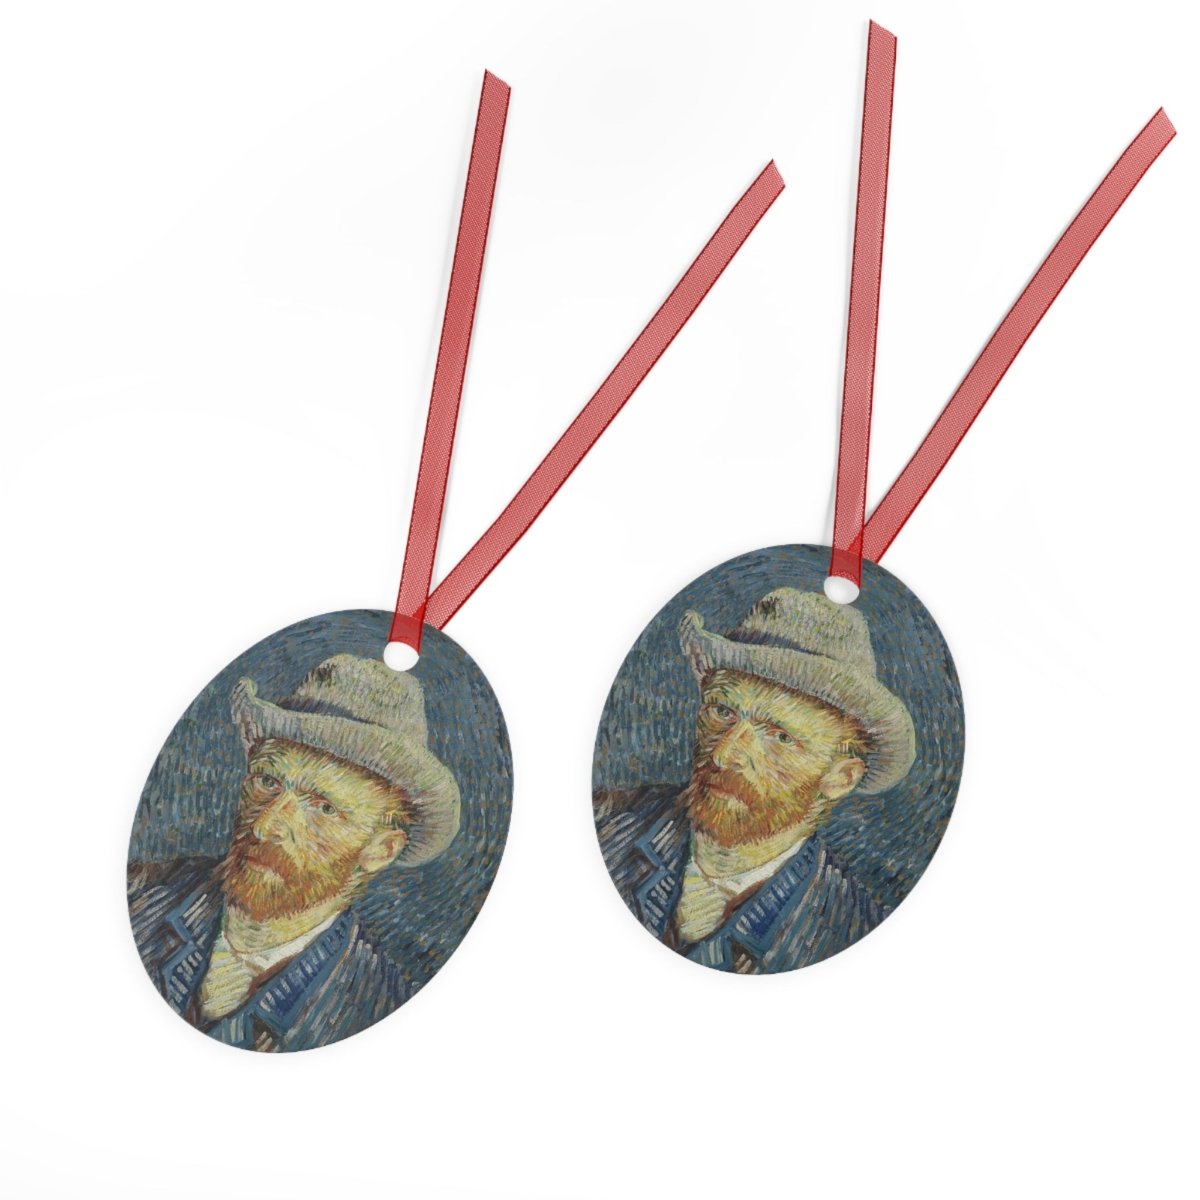 Vincent van Gogh Metal Ornaments - One Small Step History